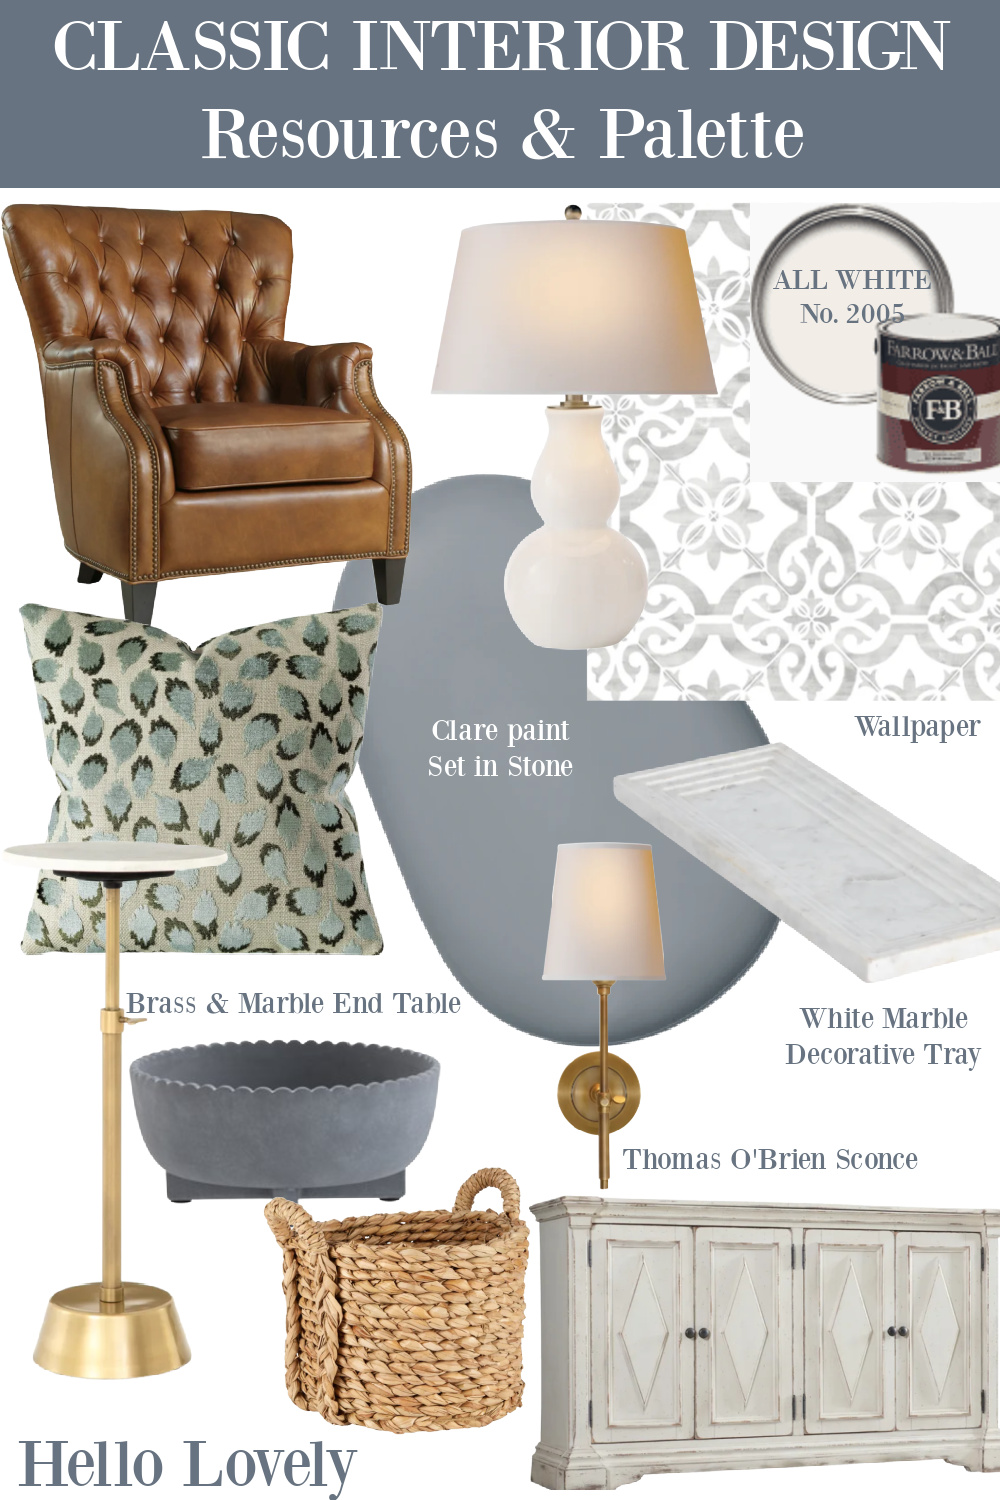 Classic Interior Design Resources & Palette - Hello Lovely Studio #shopthelook #classicinteriordesign